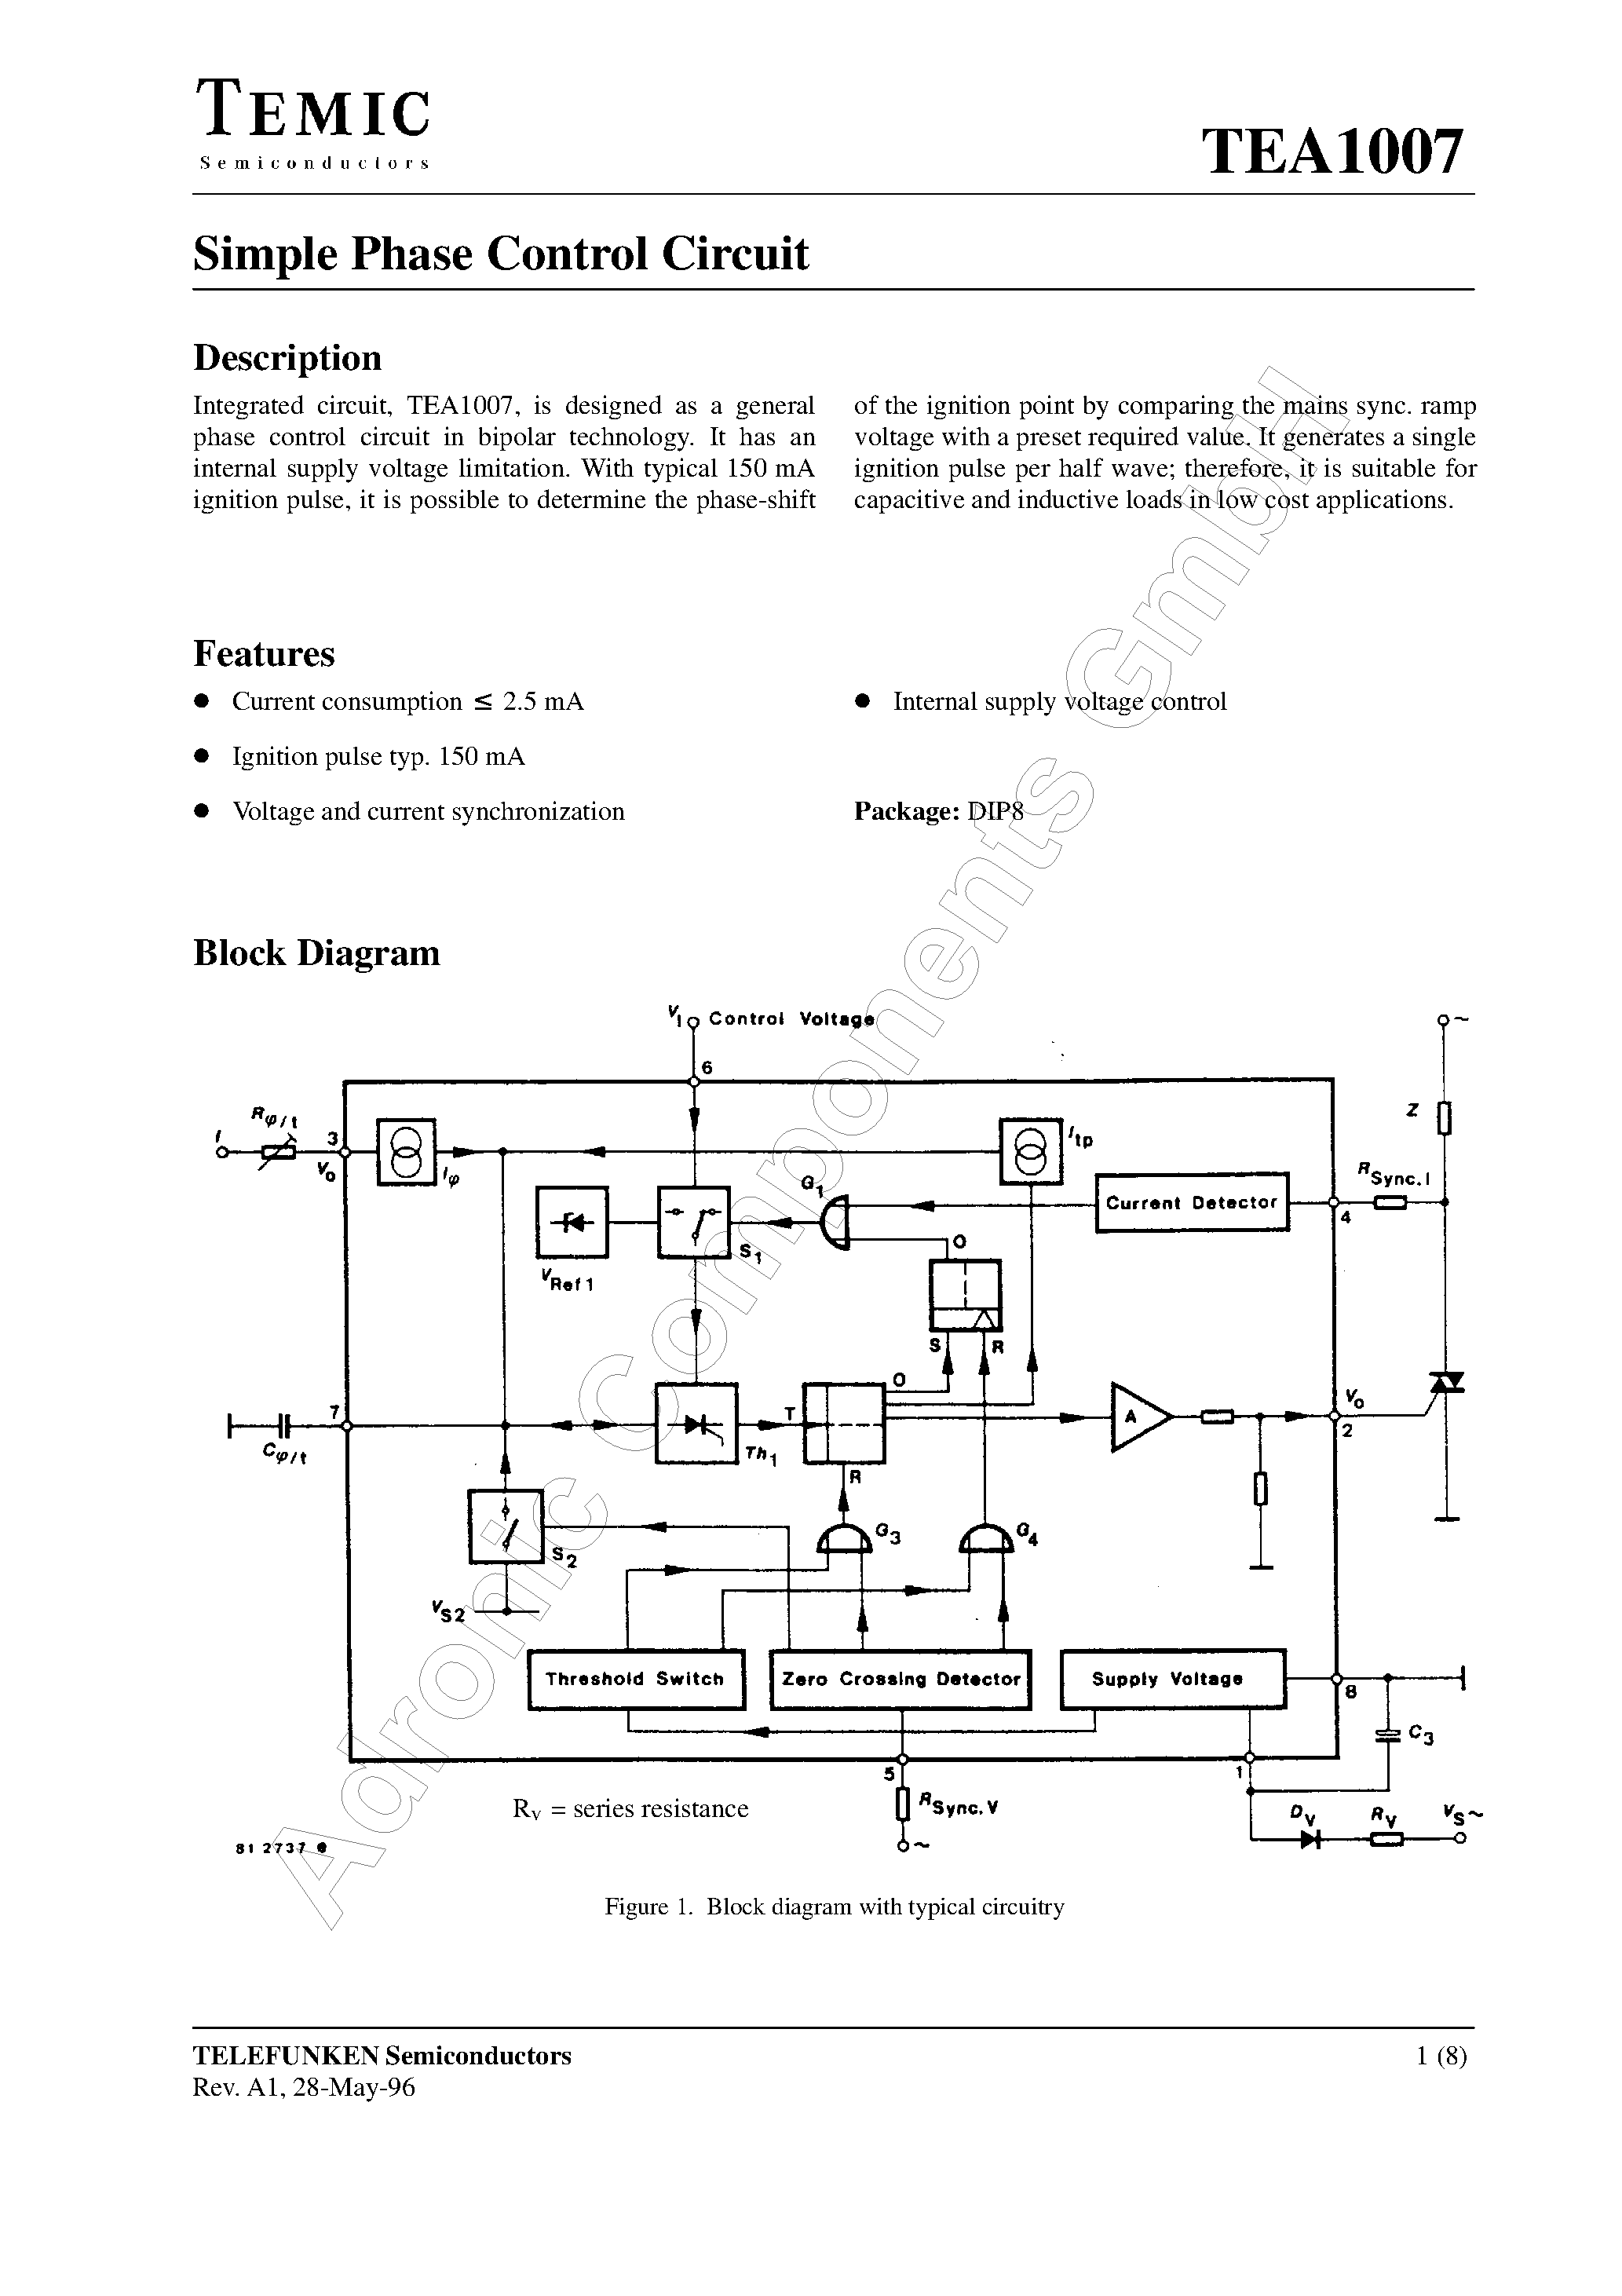 Datasheet TEA1007 - Simple Phase Control Circuit page 1